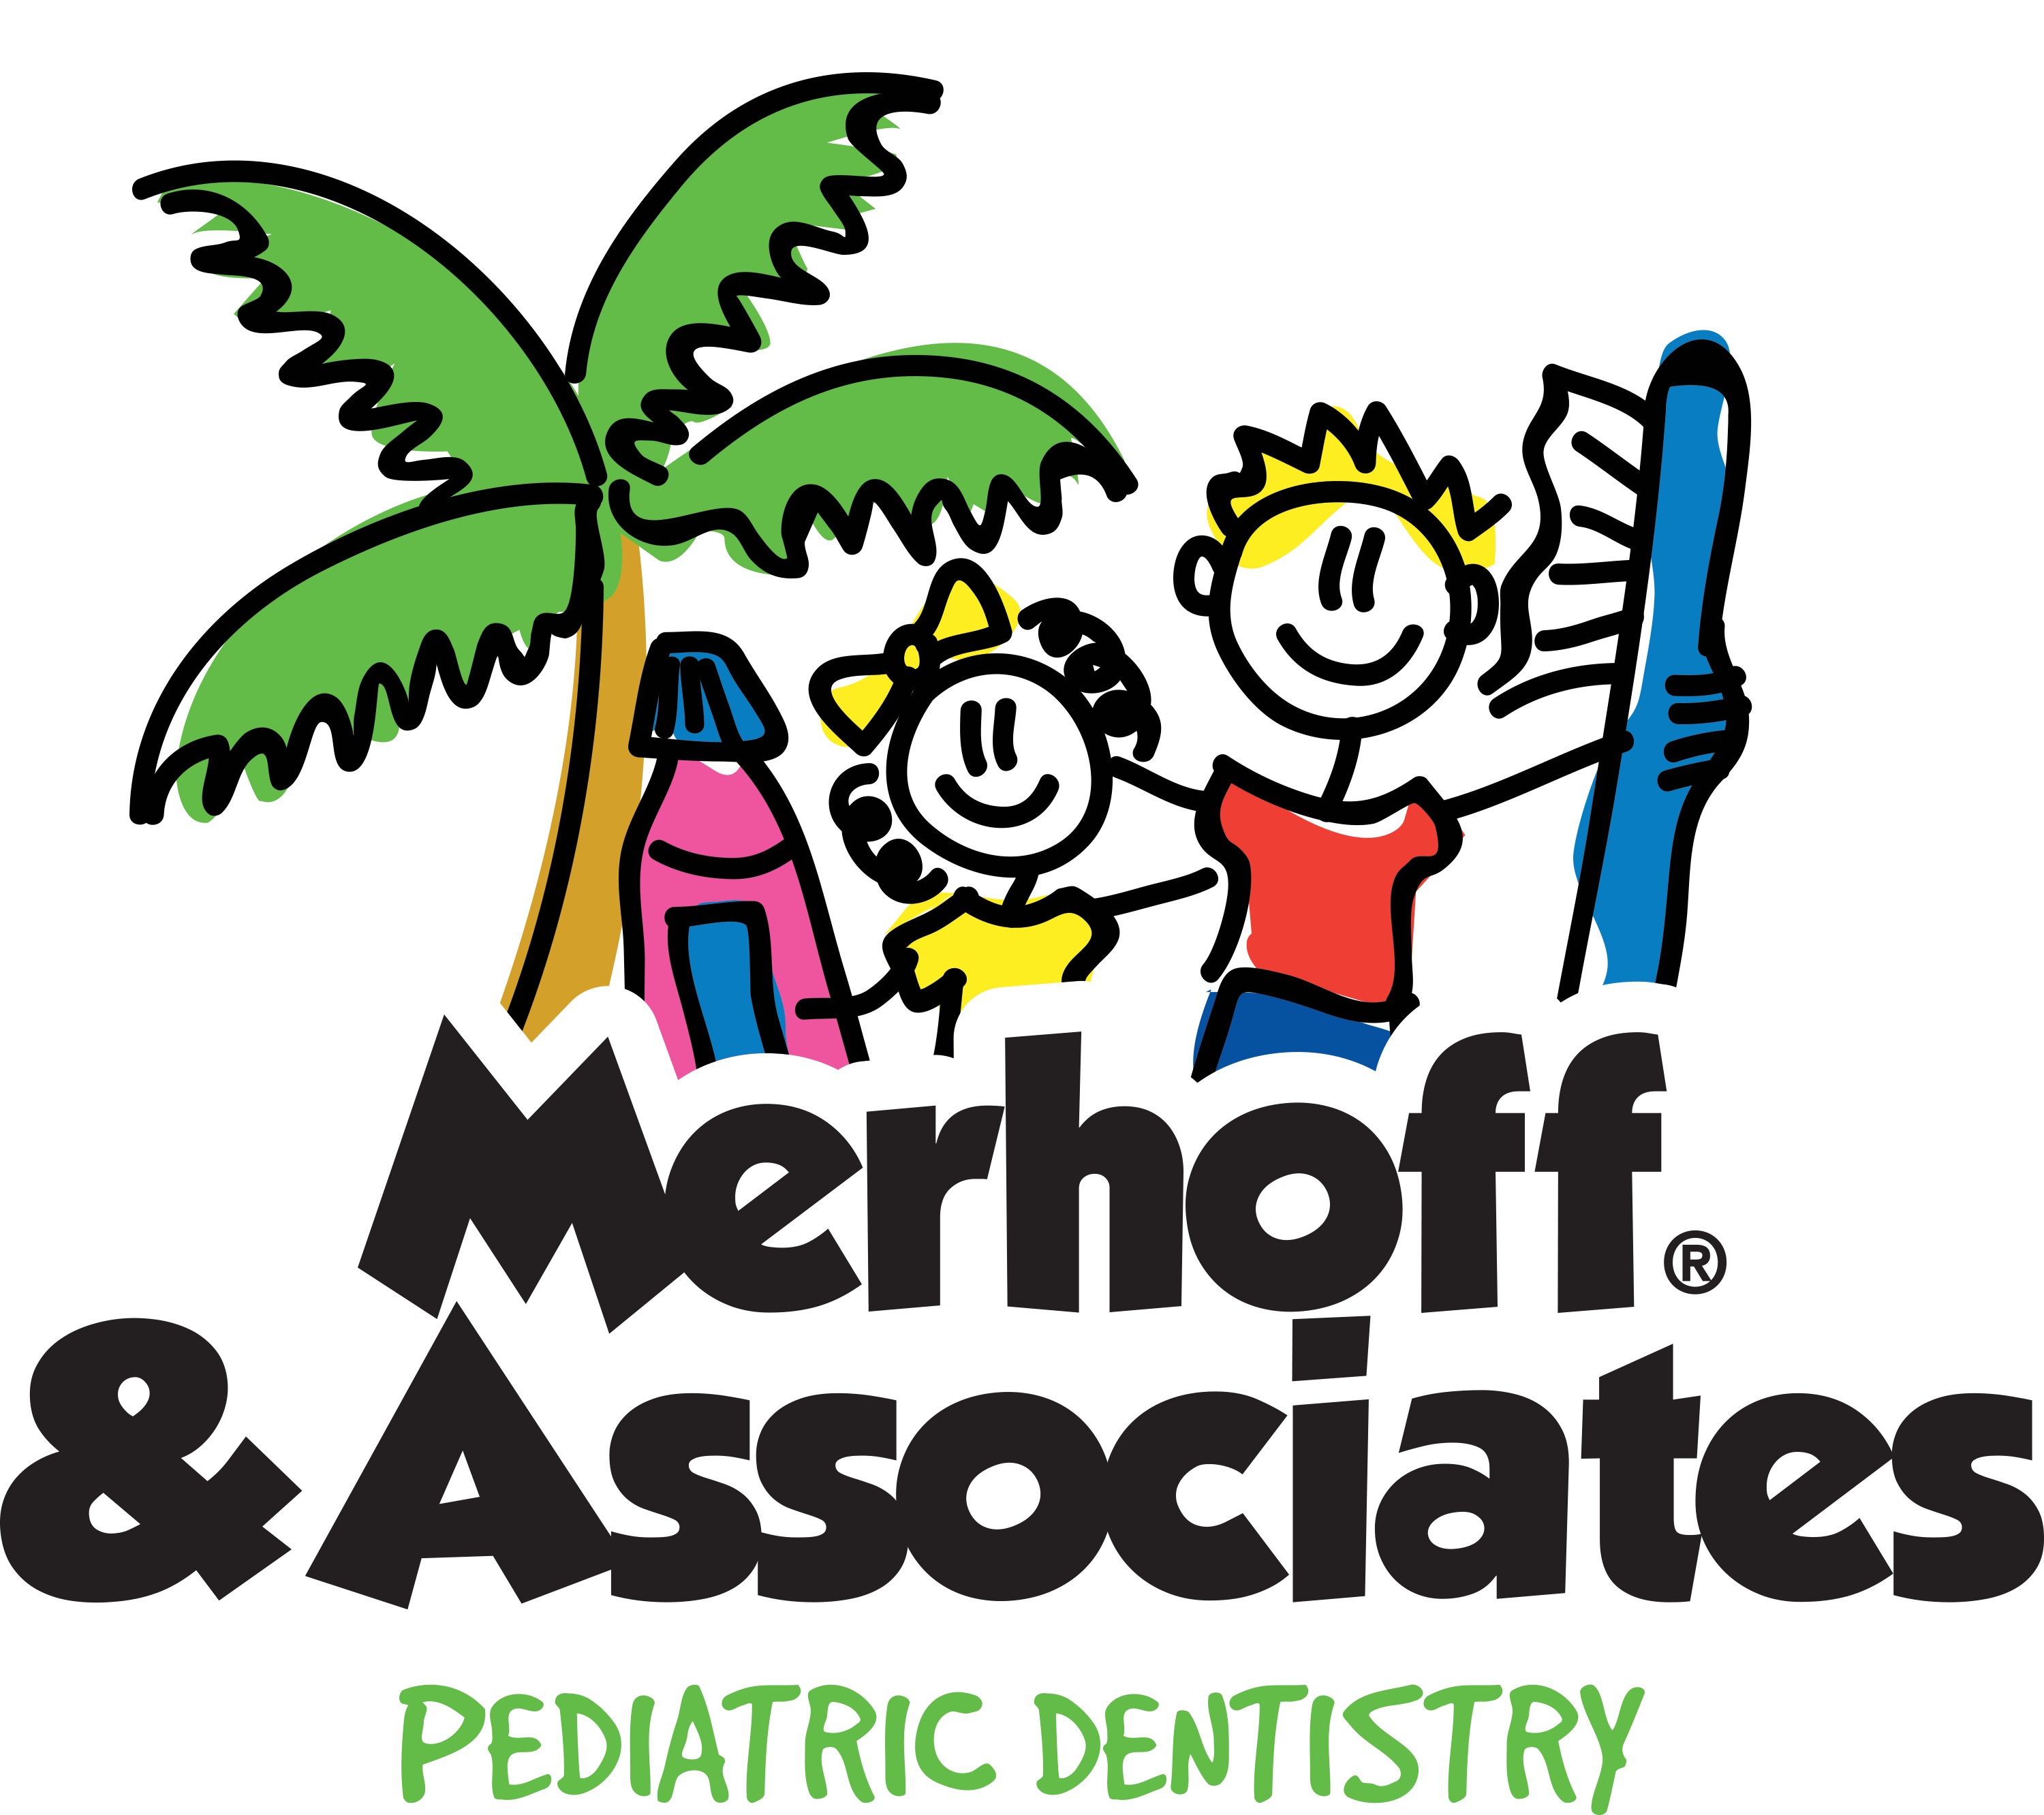 Merhoff & Associates Pediatric Dentistry